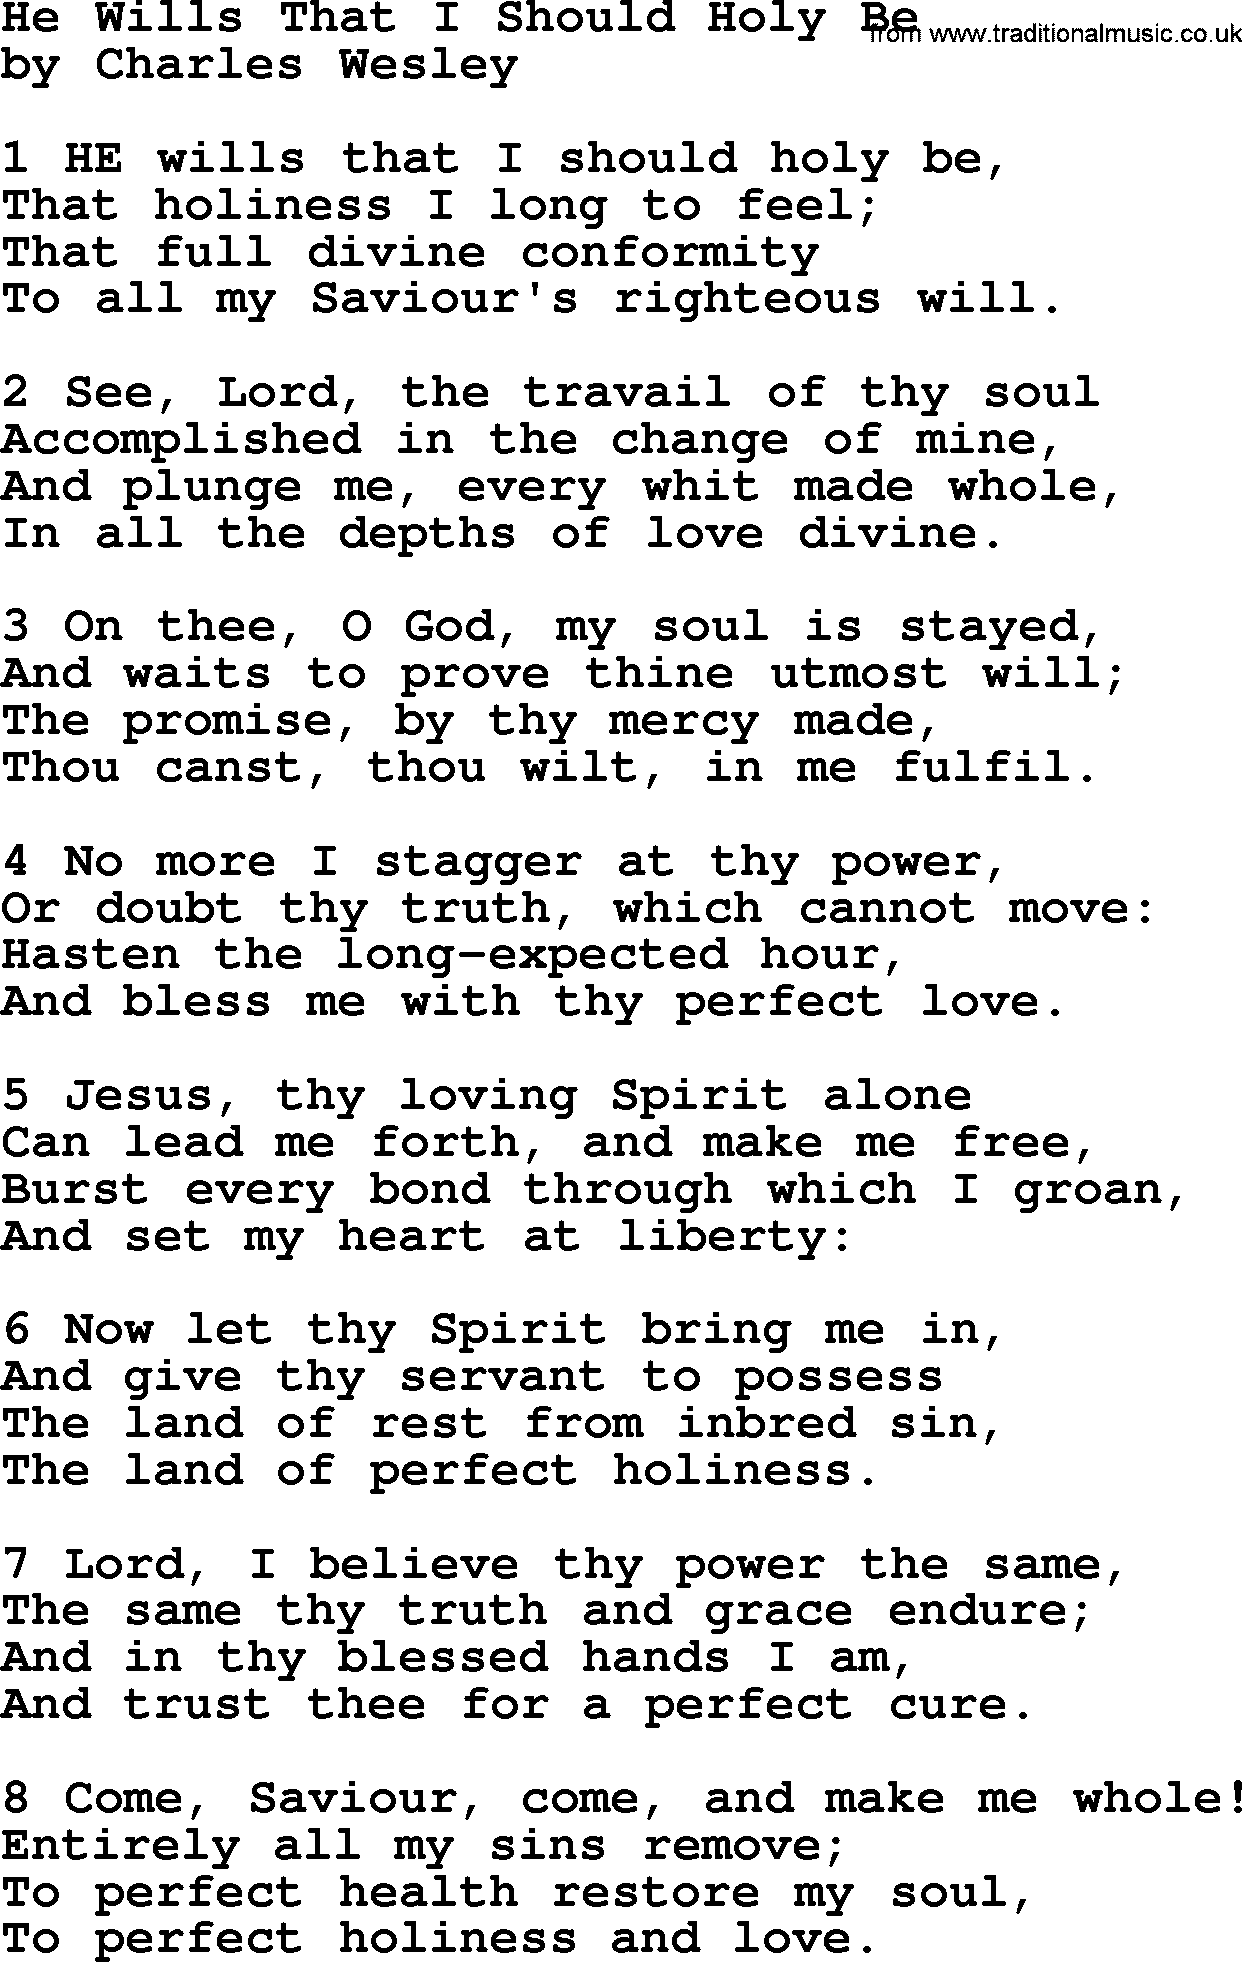 Charles Wesley hymn: He Wills That I Should Holy Be, lyrics